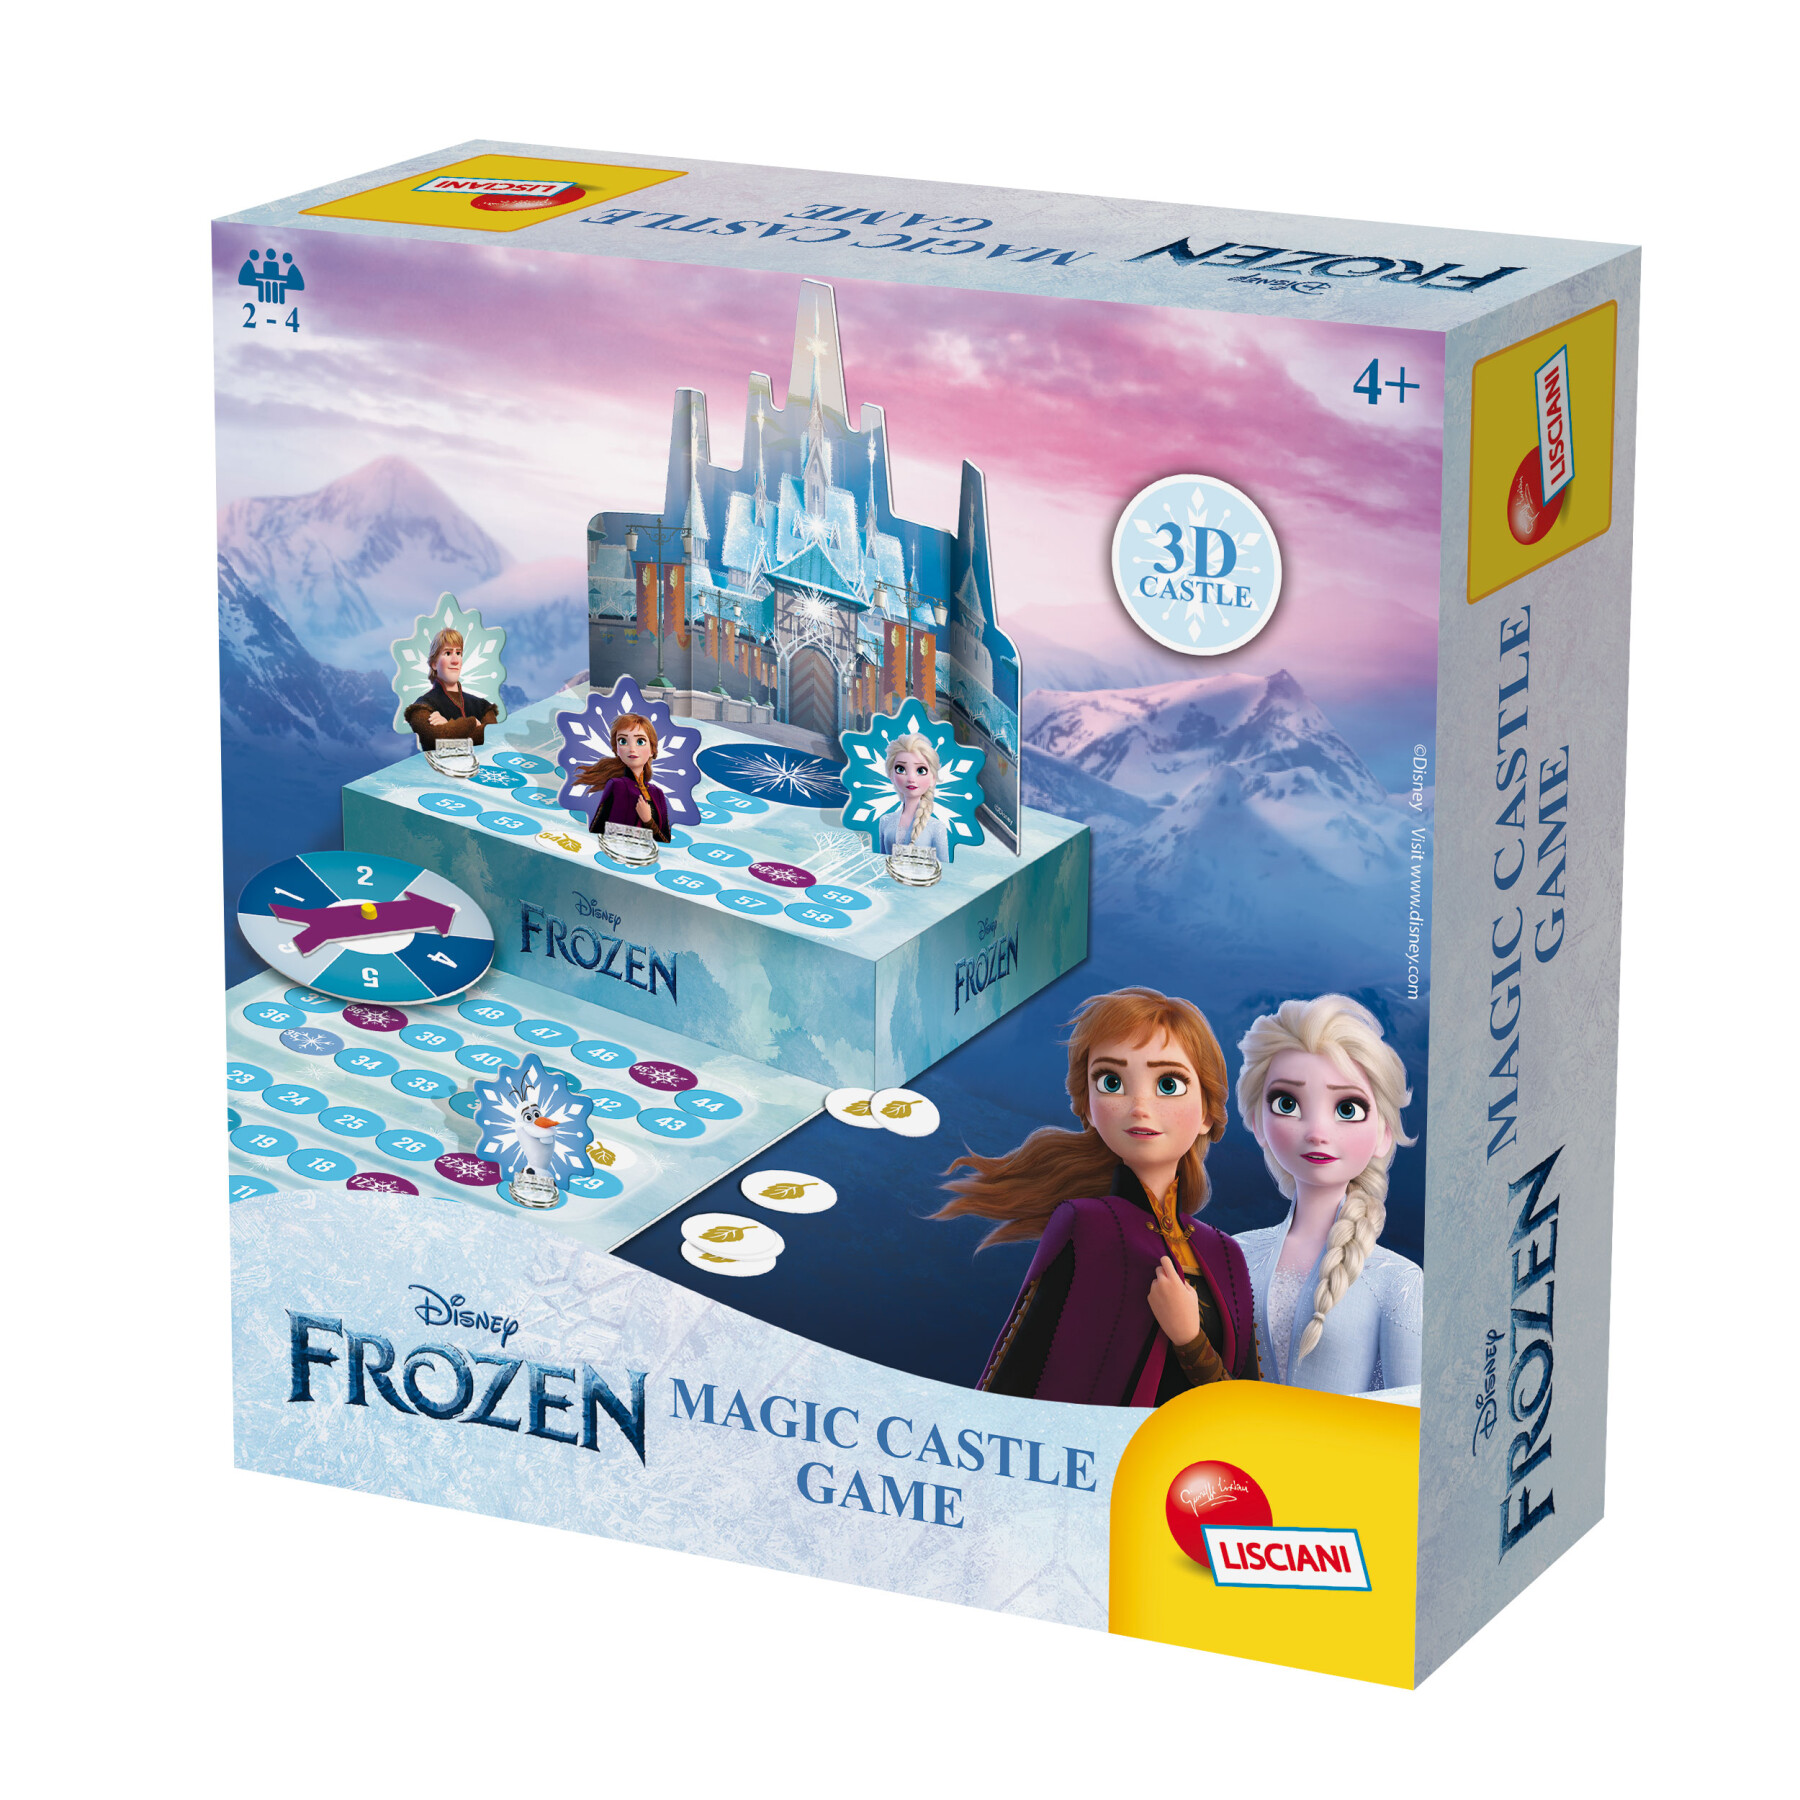 Frozen super game - LISCIANI, Frozen